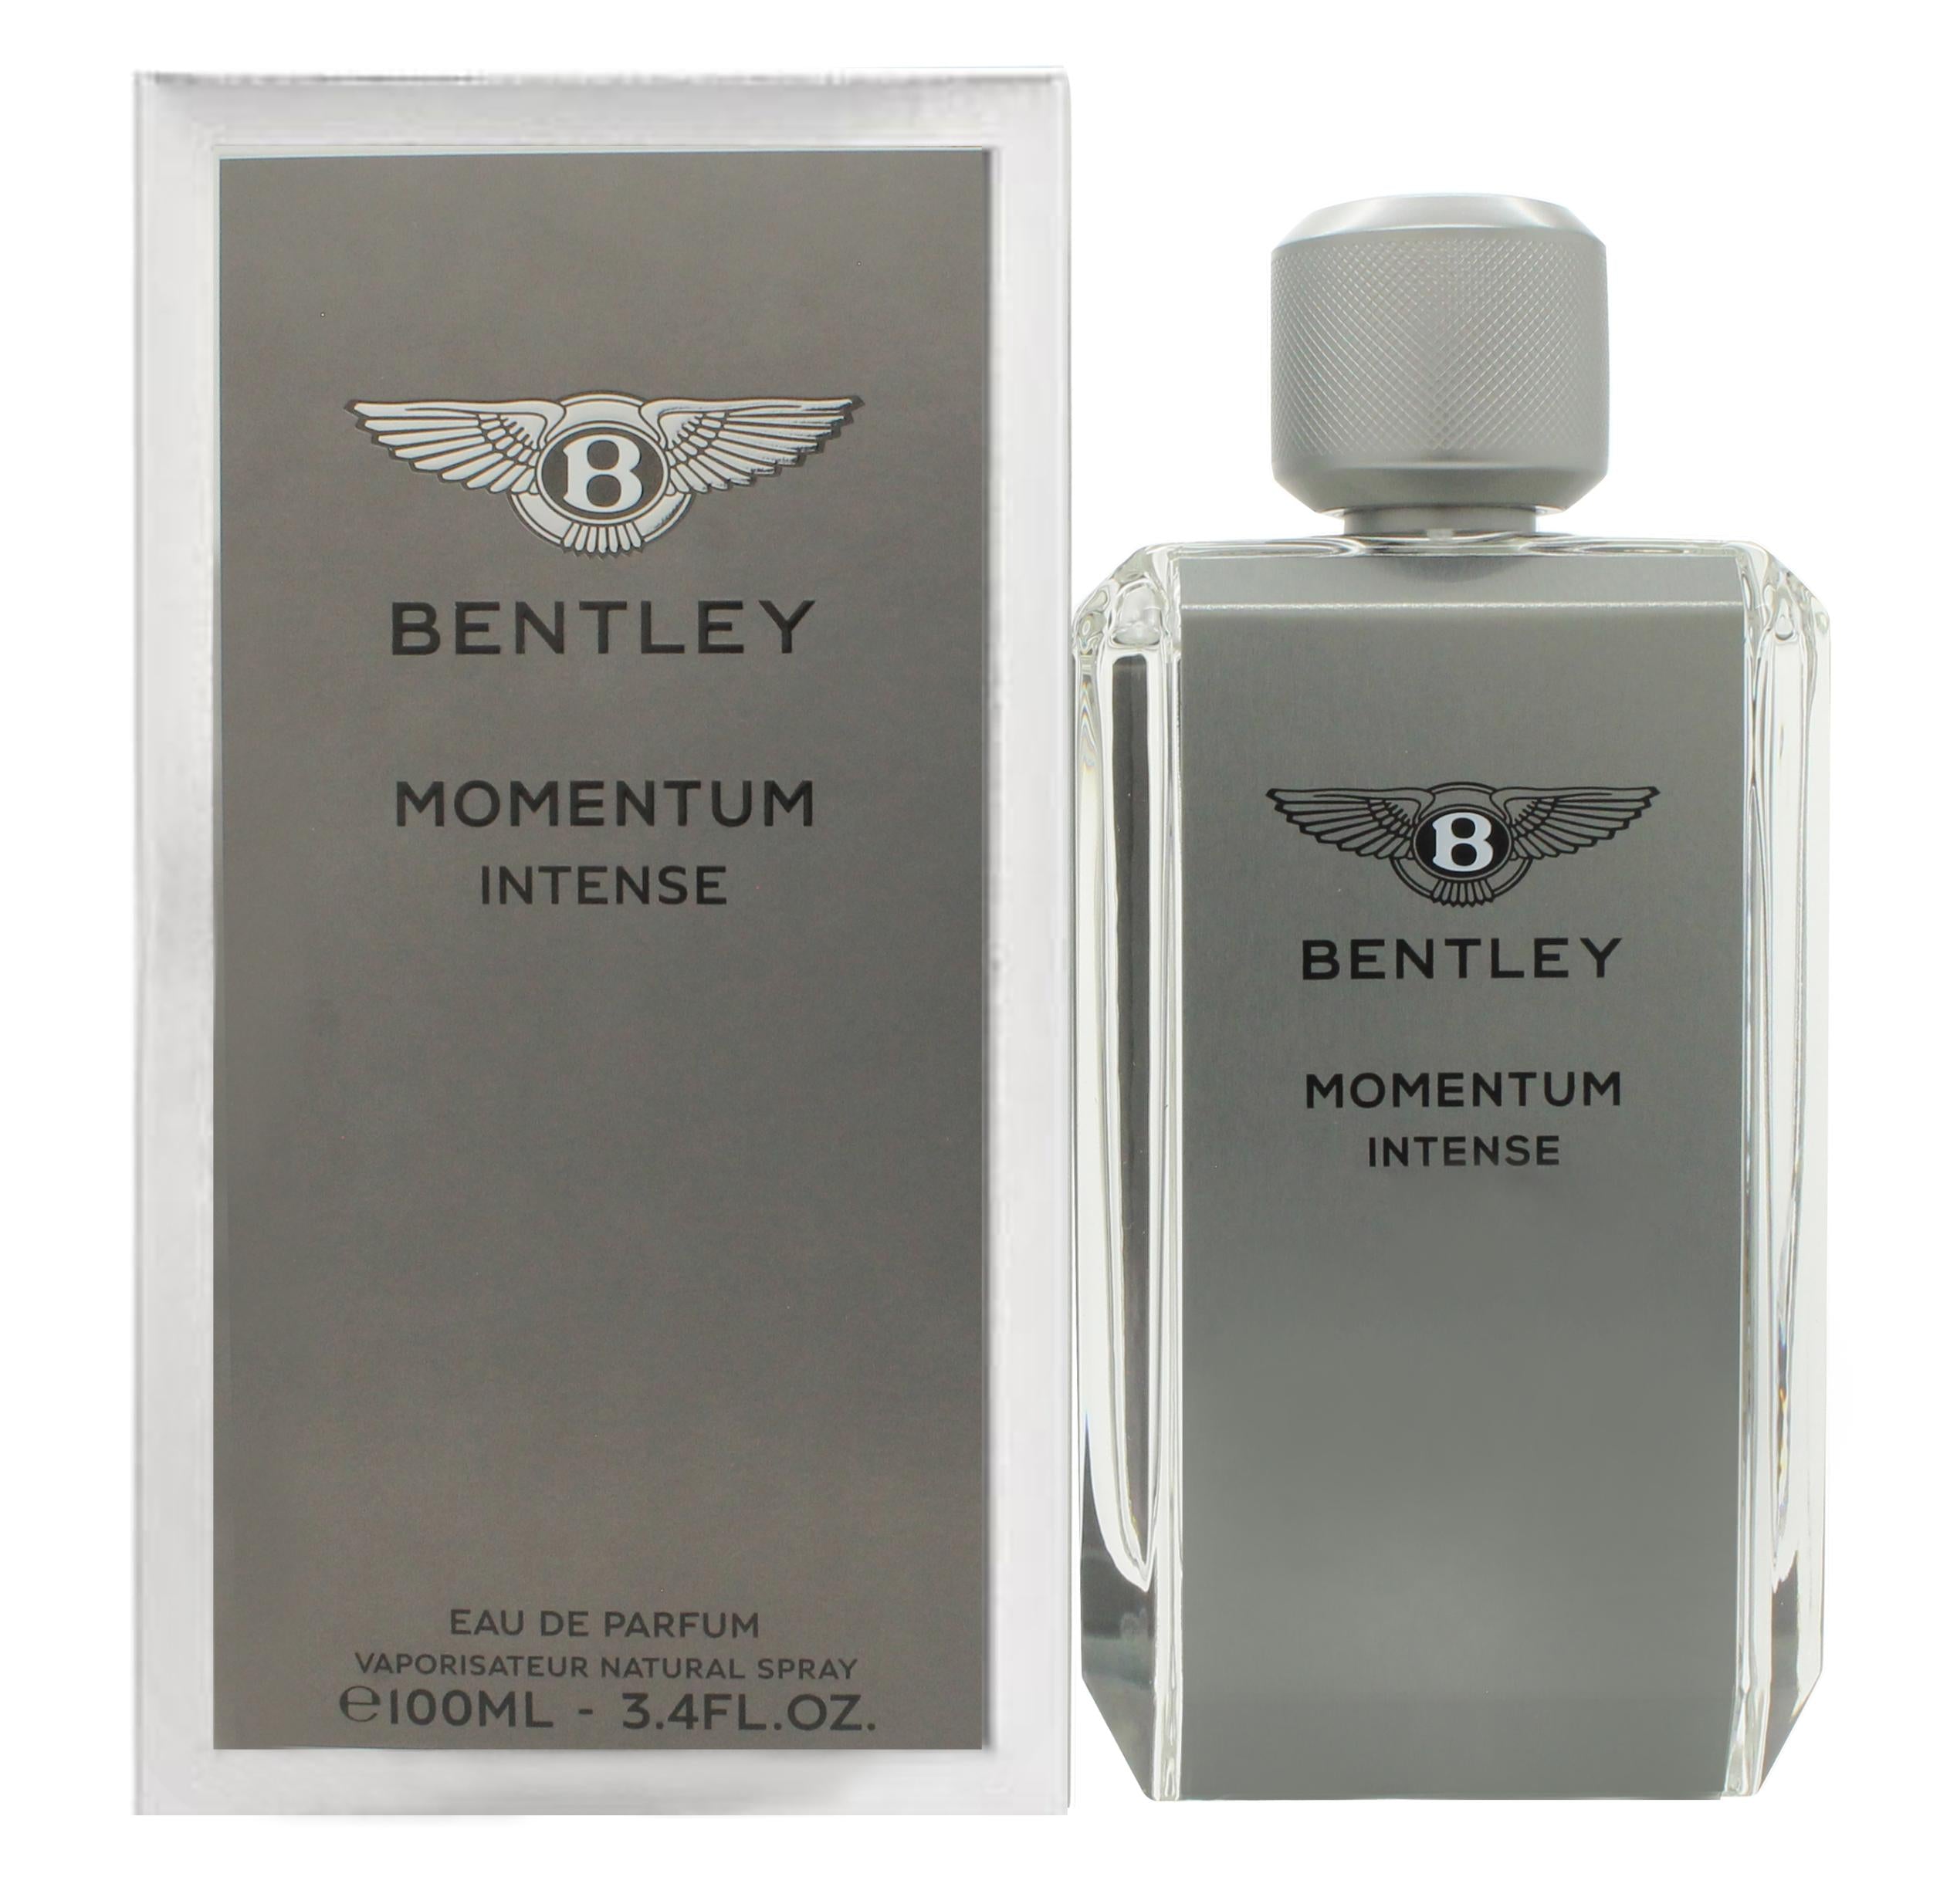 View Bentley Momentum Intense Eau de Parfum 100ml Sprej information